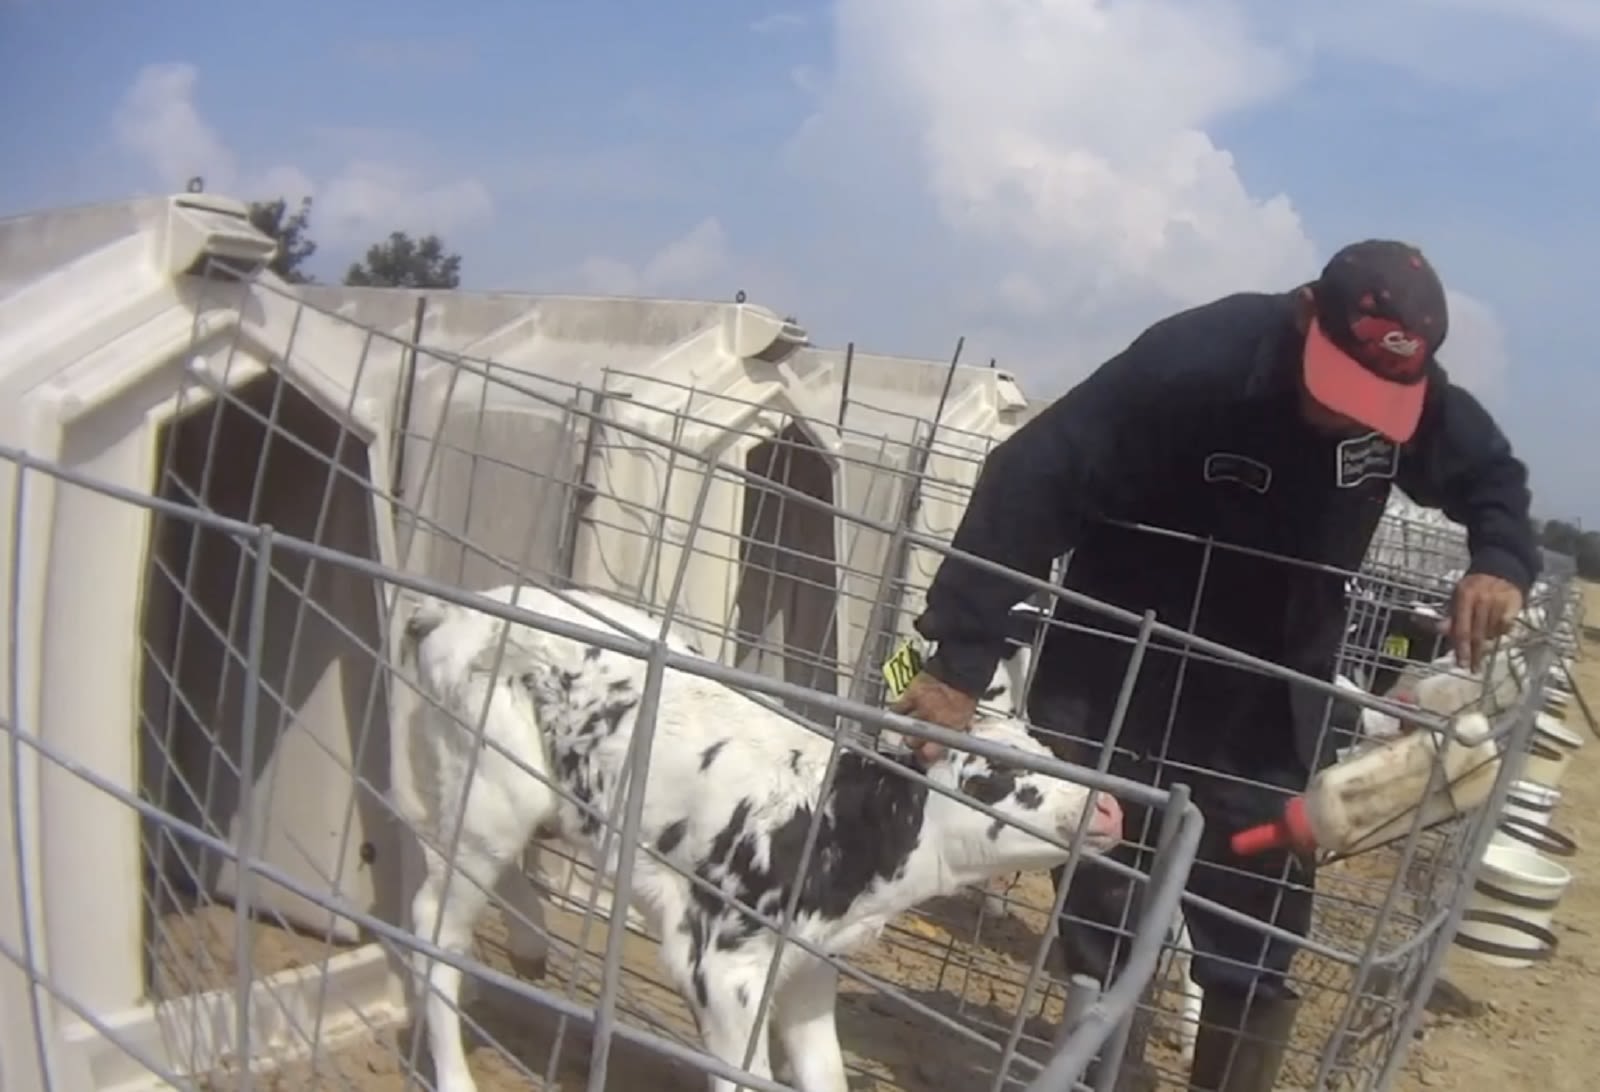 An arrest has been made in the Fair Oaks Farms animal cruelty case | CNN